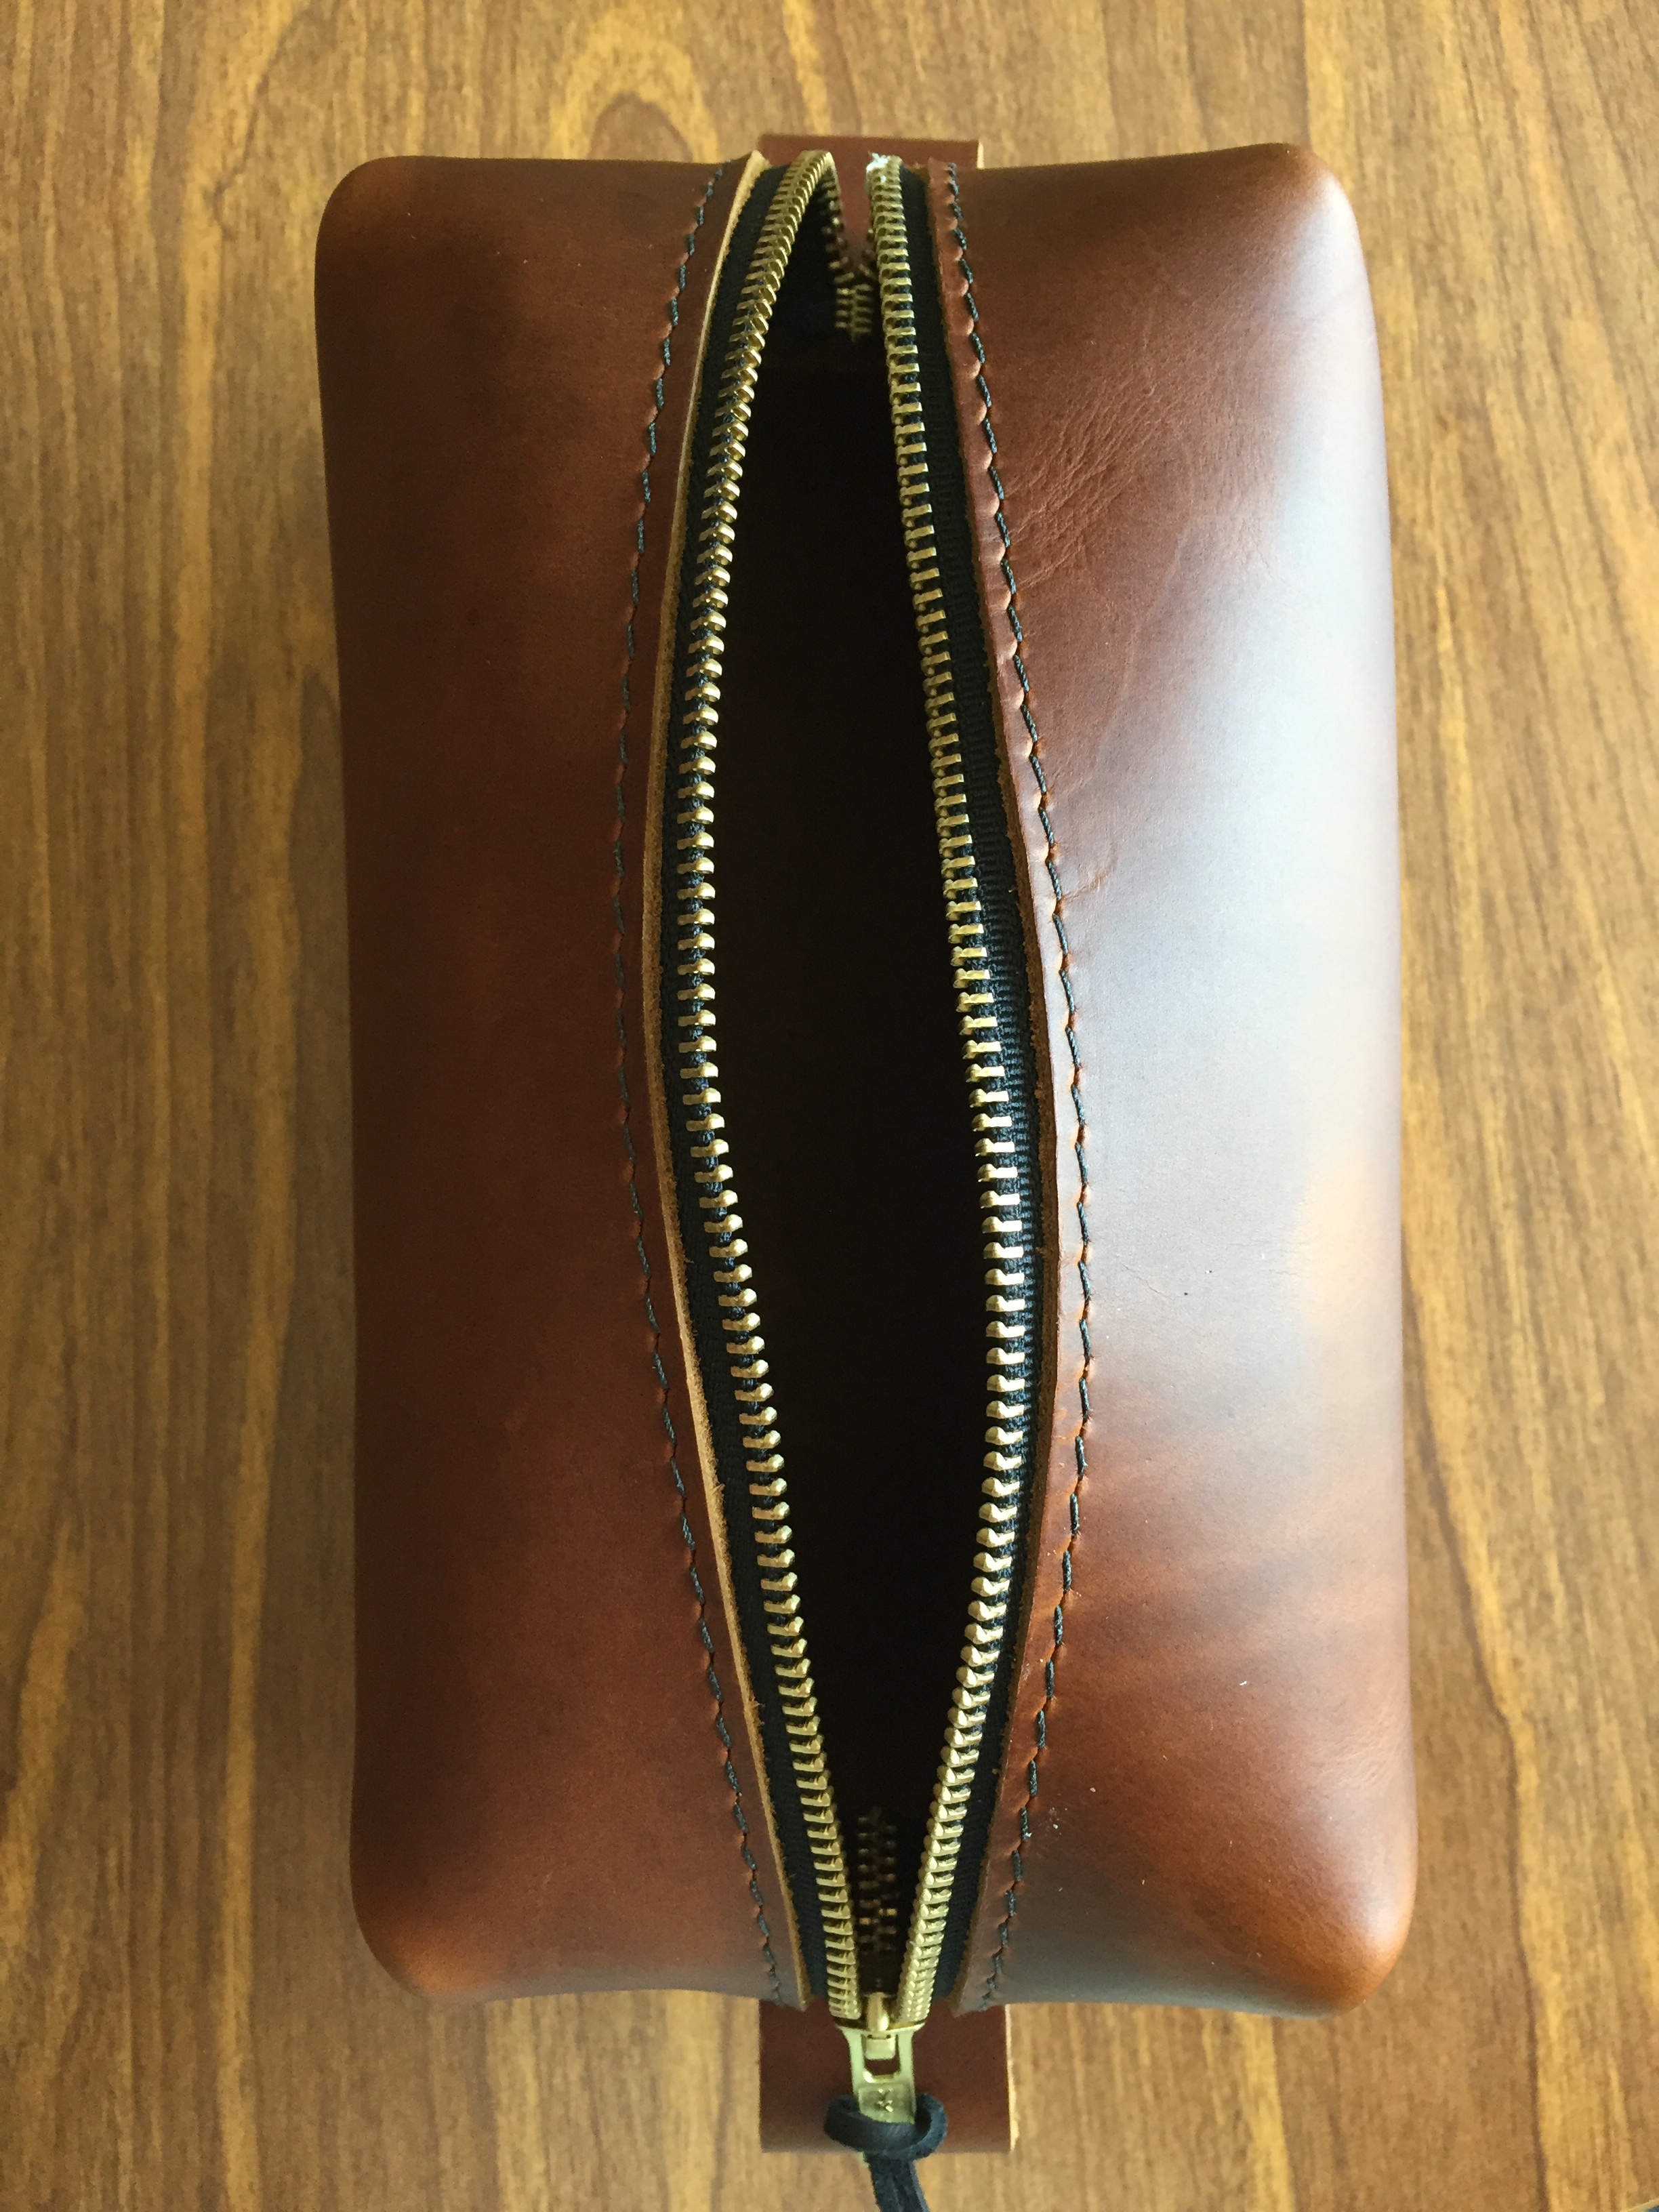 Portland Leather Deluxe Dopp Kit, Cognac